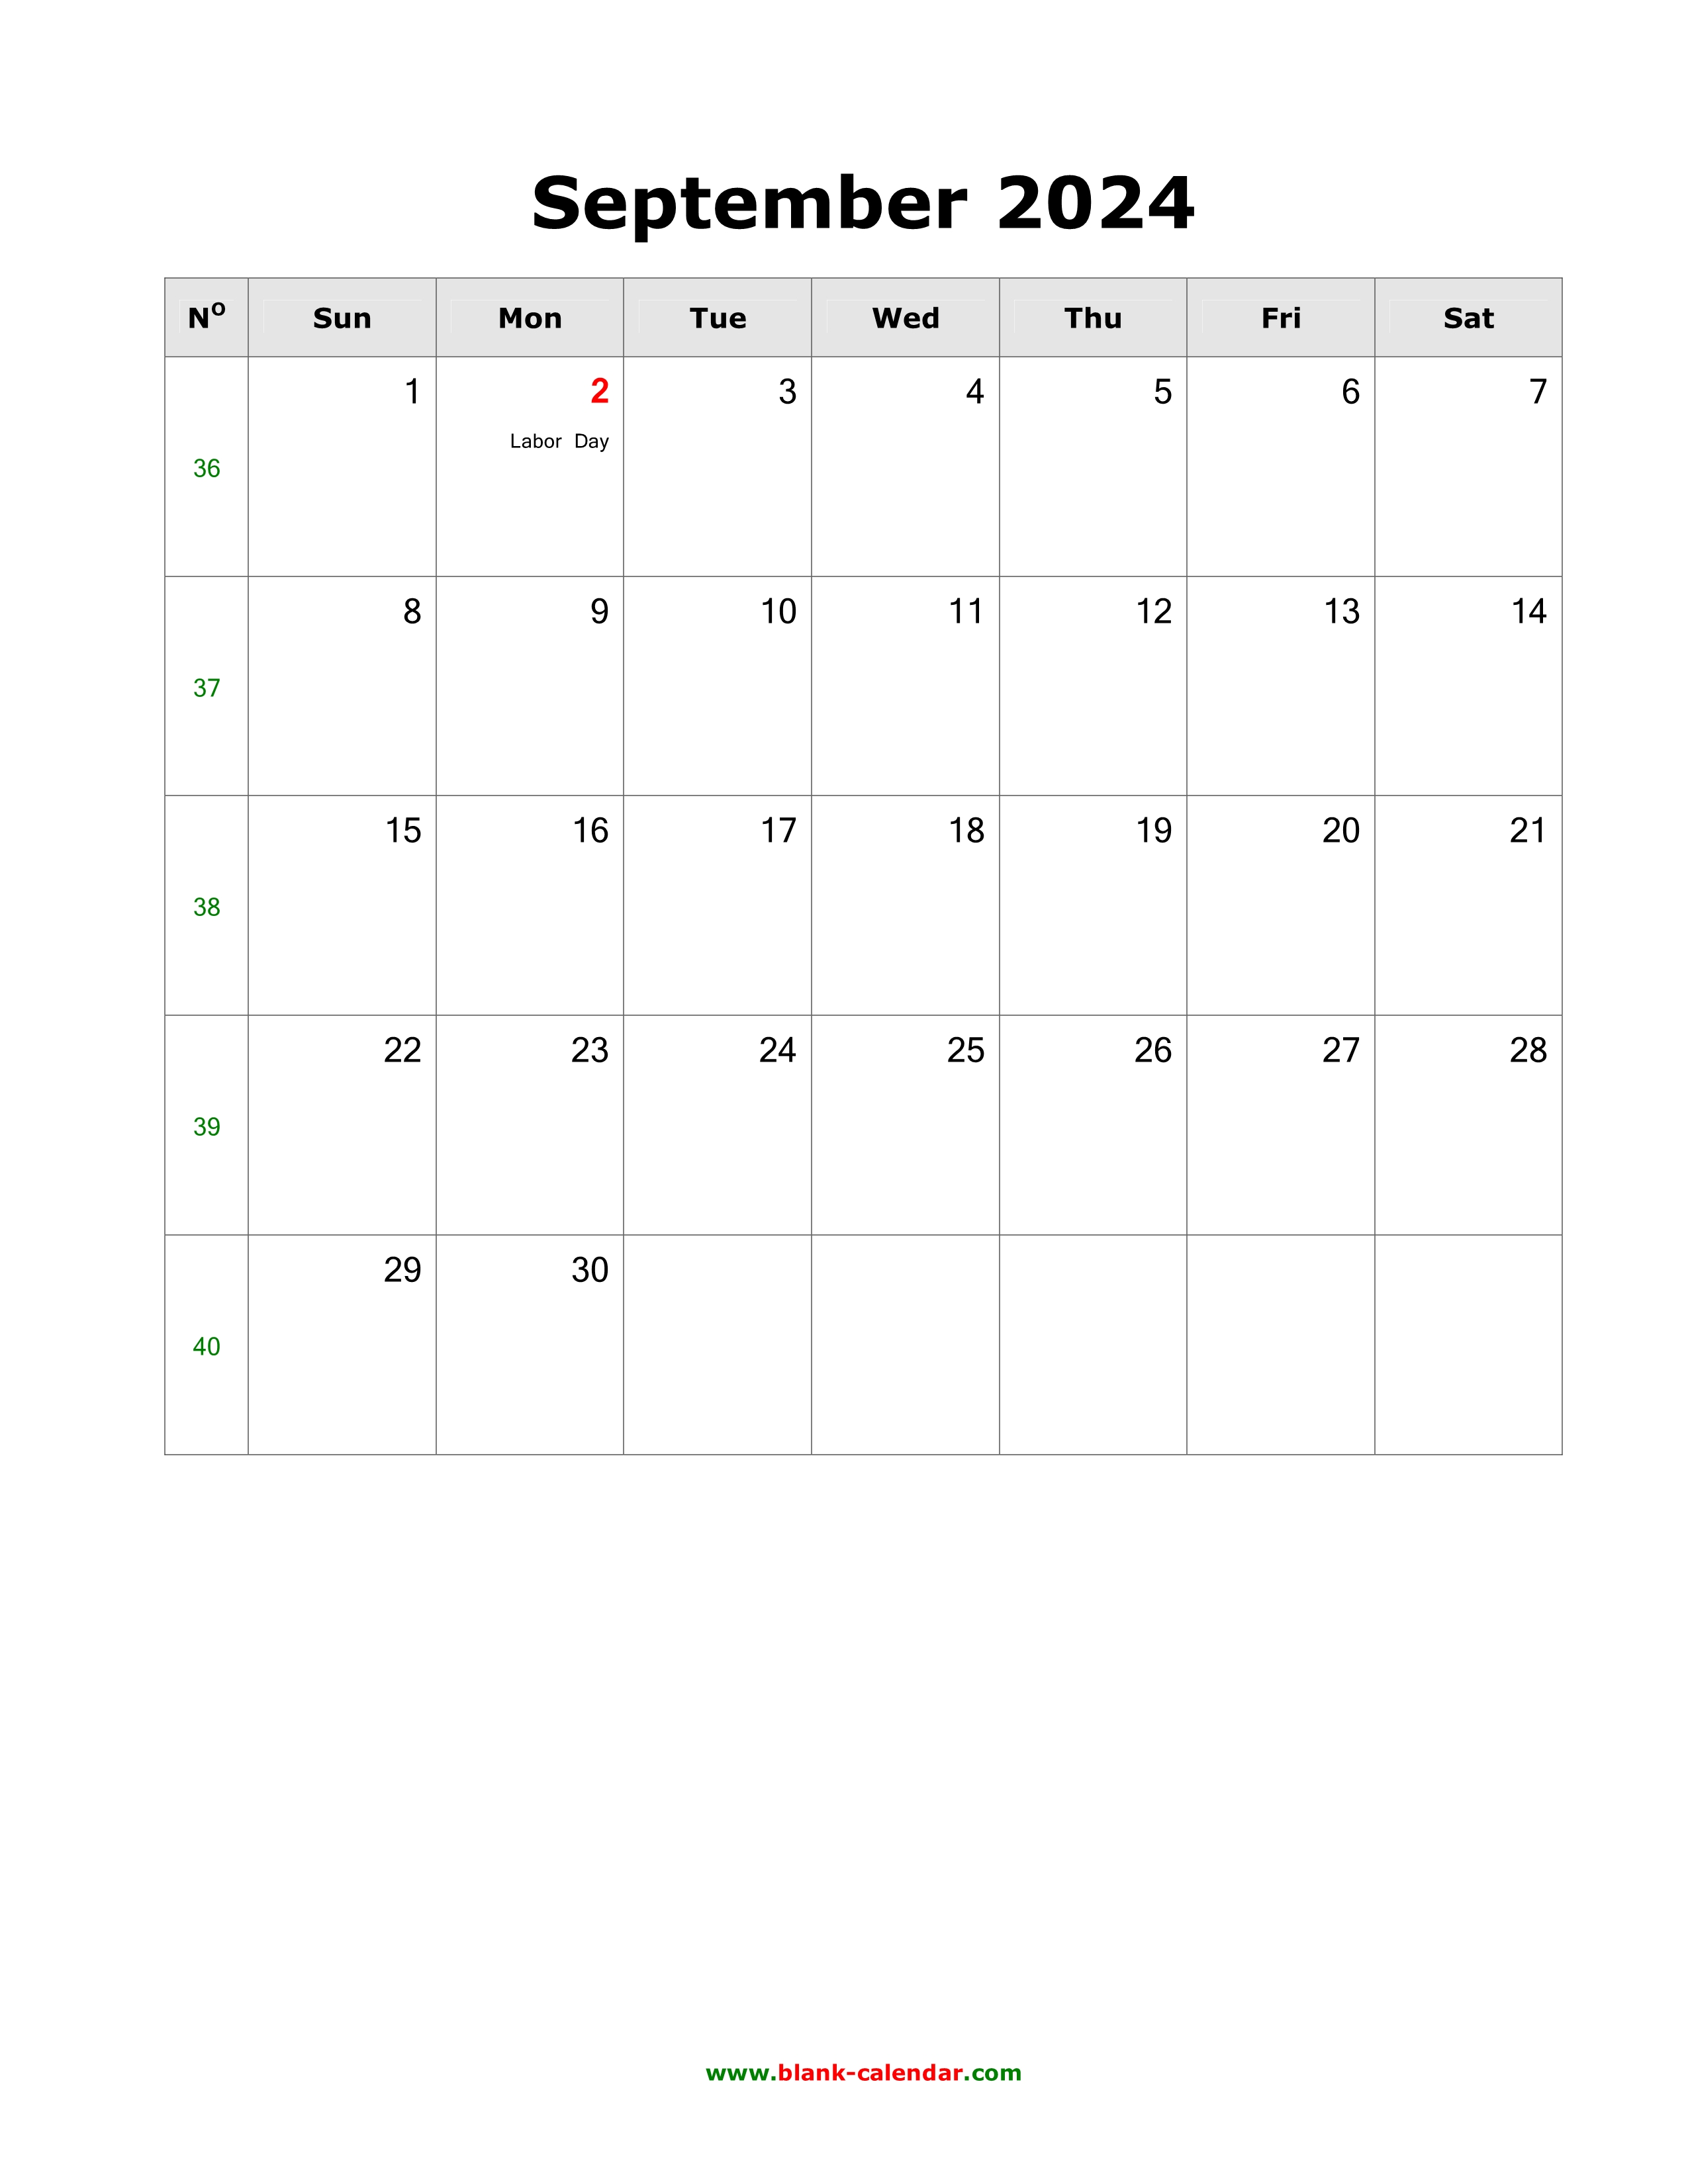 Download September 2024 Blank Calendar with US Holidays (vertical)